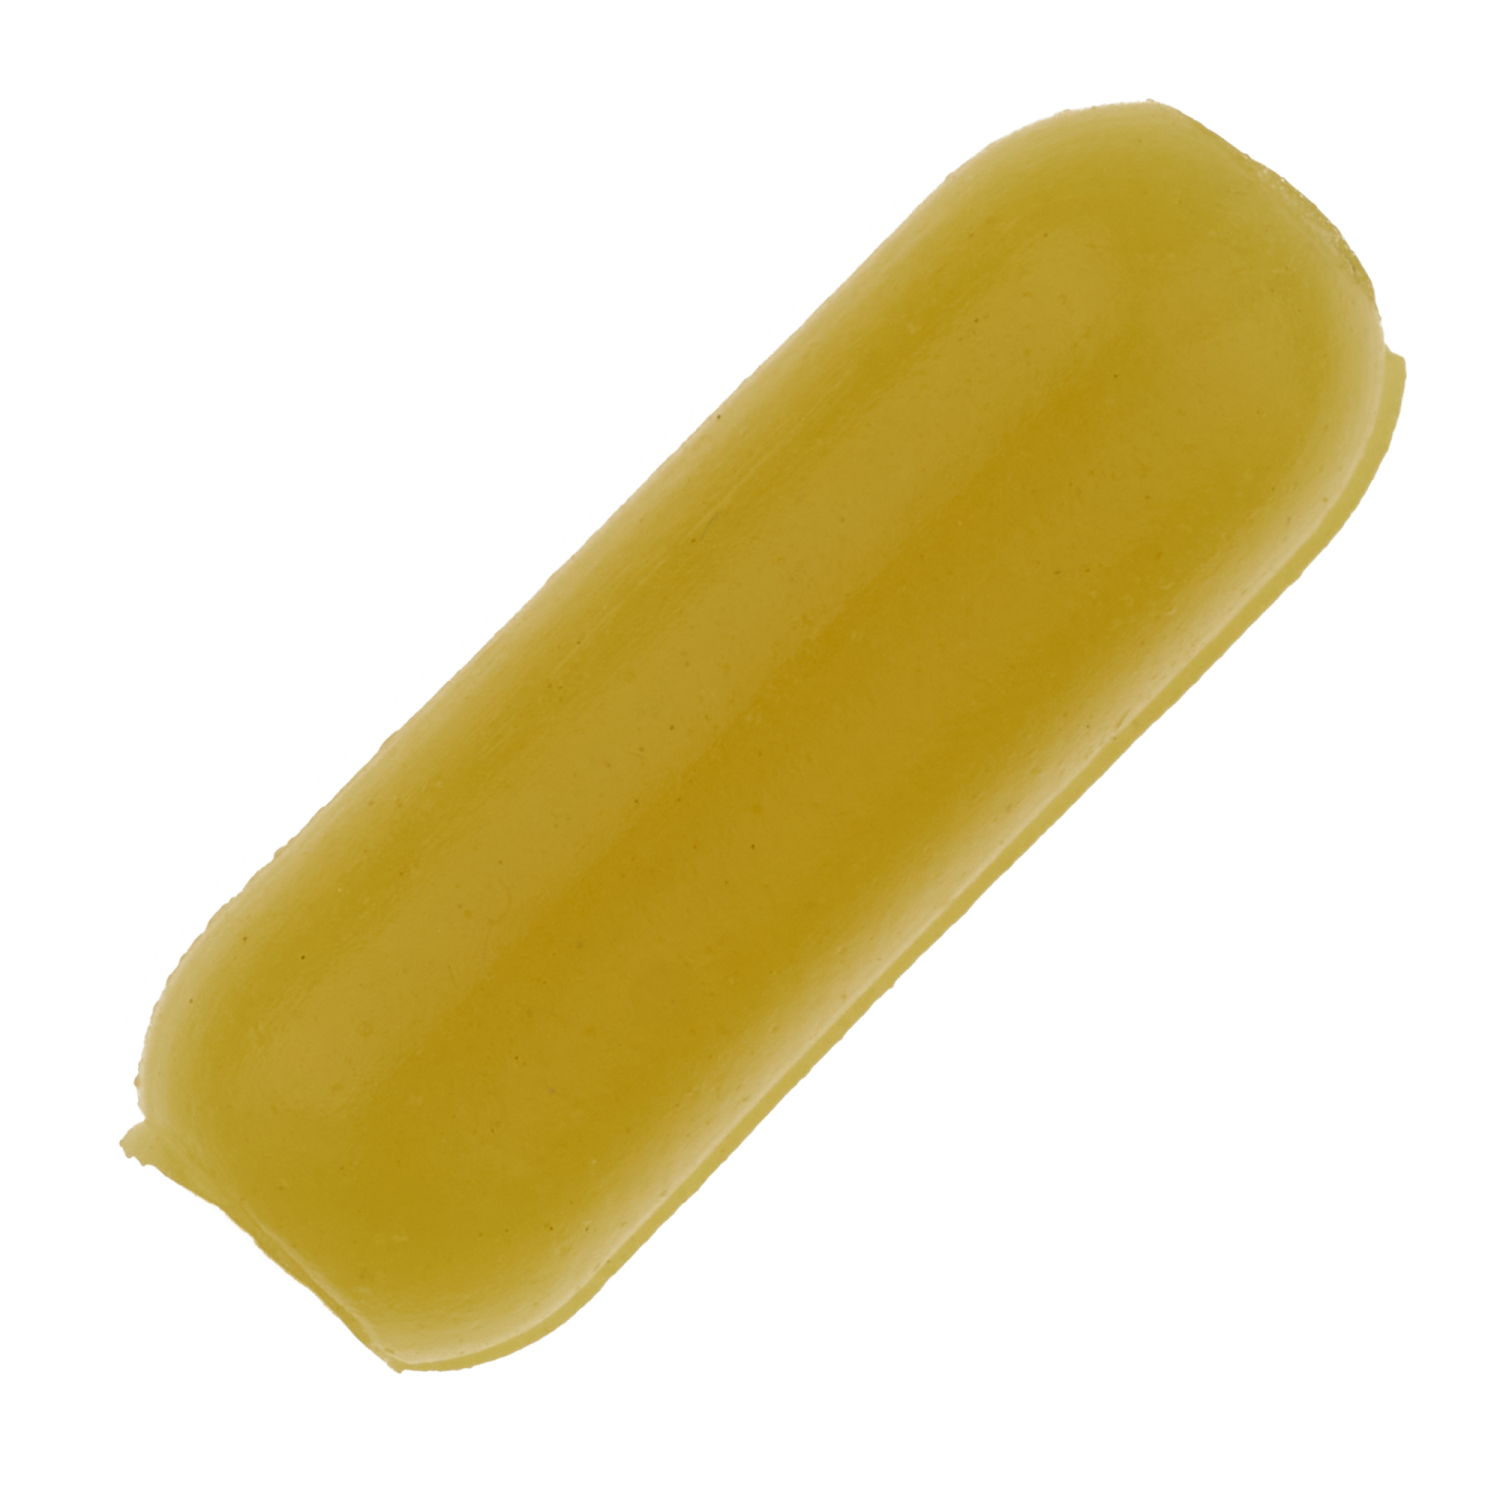 Приманка силиконовая Soorex Pro Barrel 27x9мм Cheese #211 Lemon glow